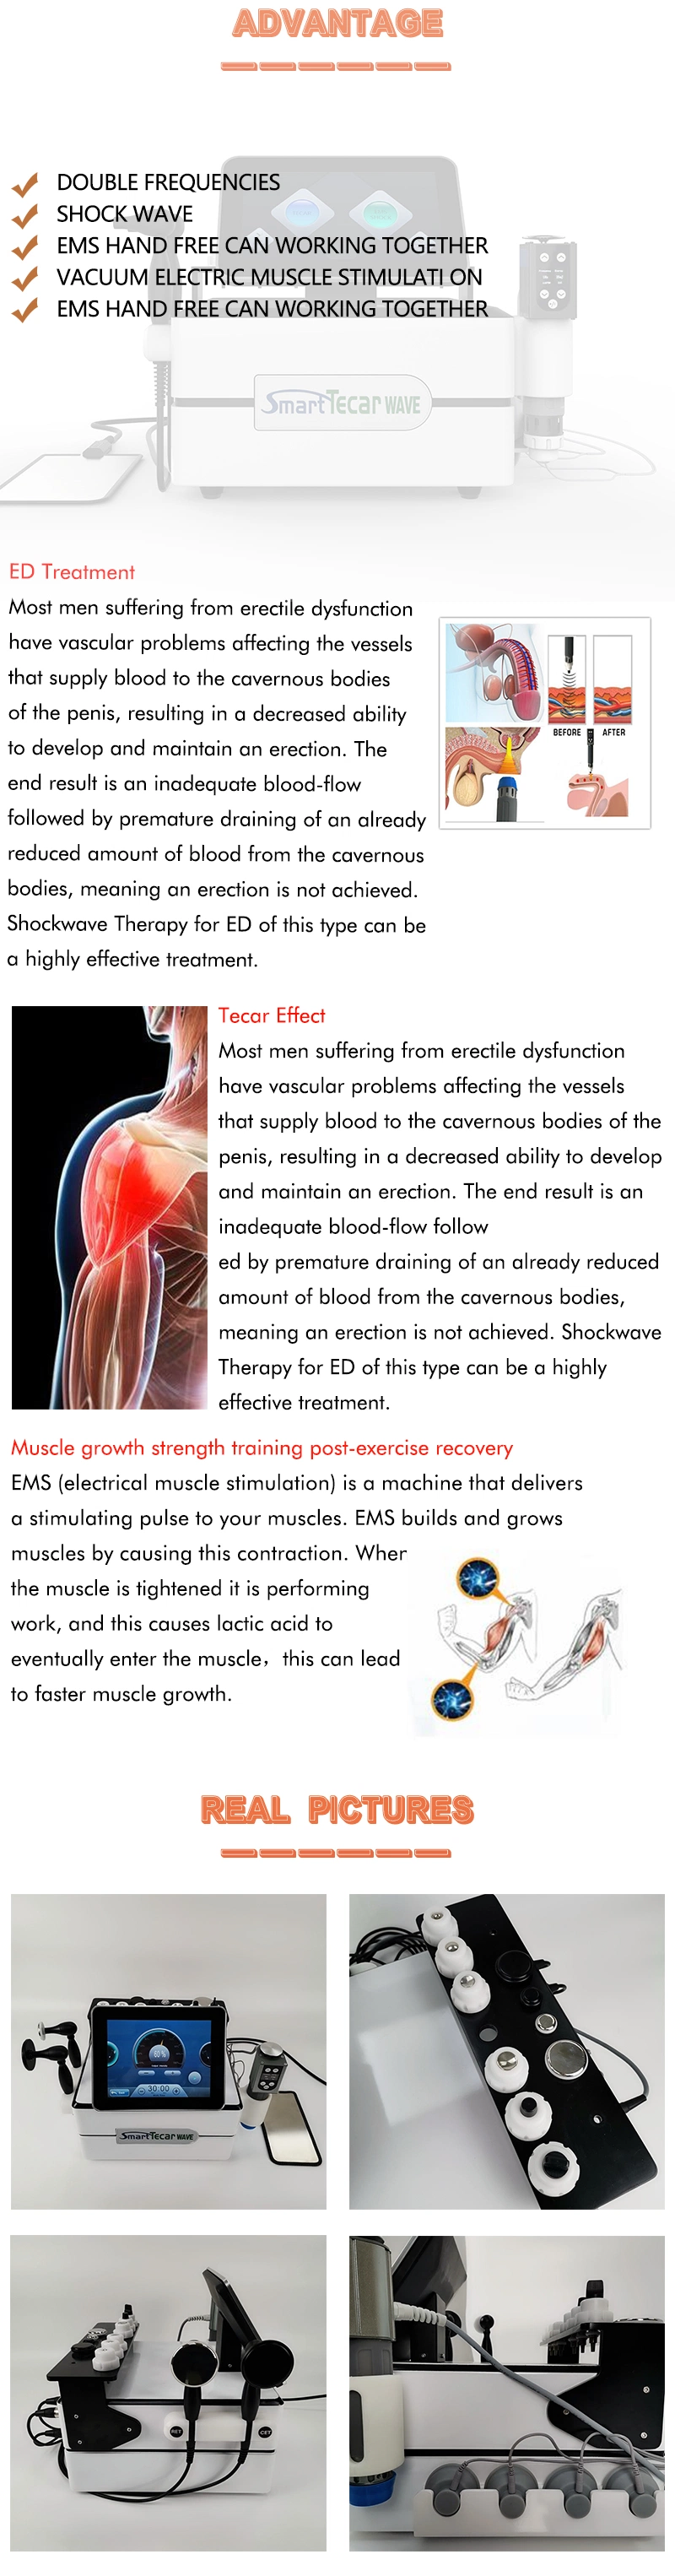 Smart Tecar Knee Rehabilitation Short Wave Massoterapia Diathermy Tecar Machine